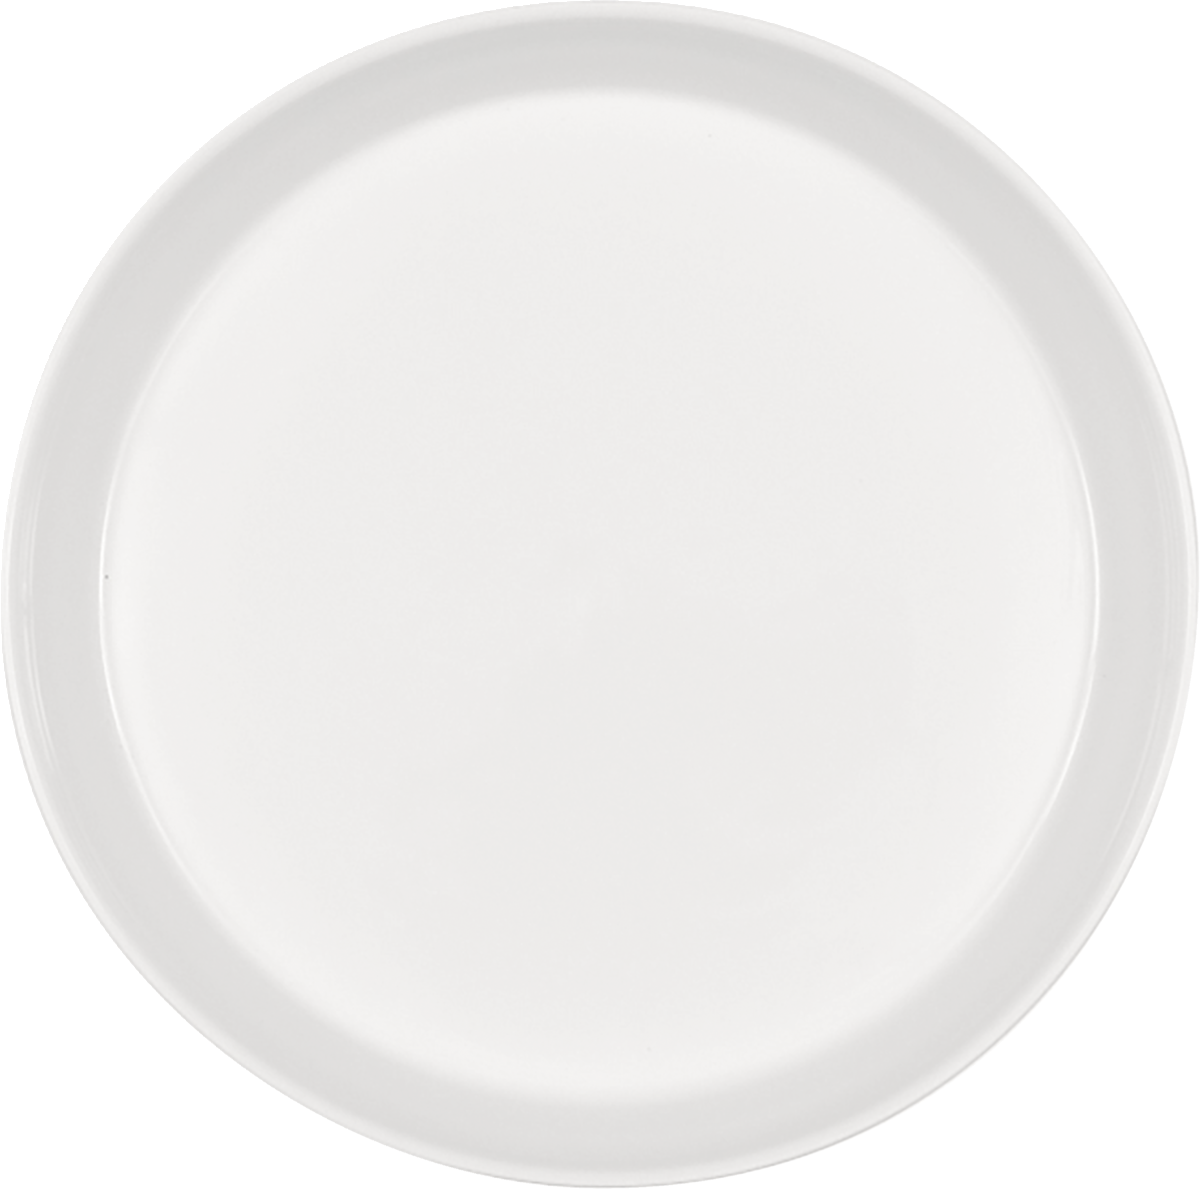 Plate deep round plain bottom 23cm